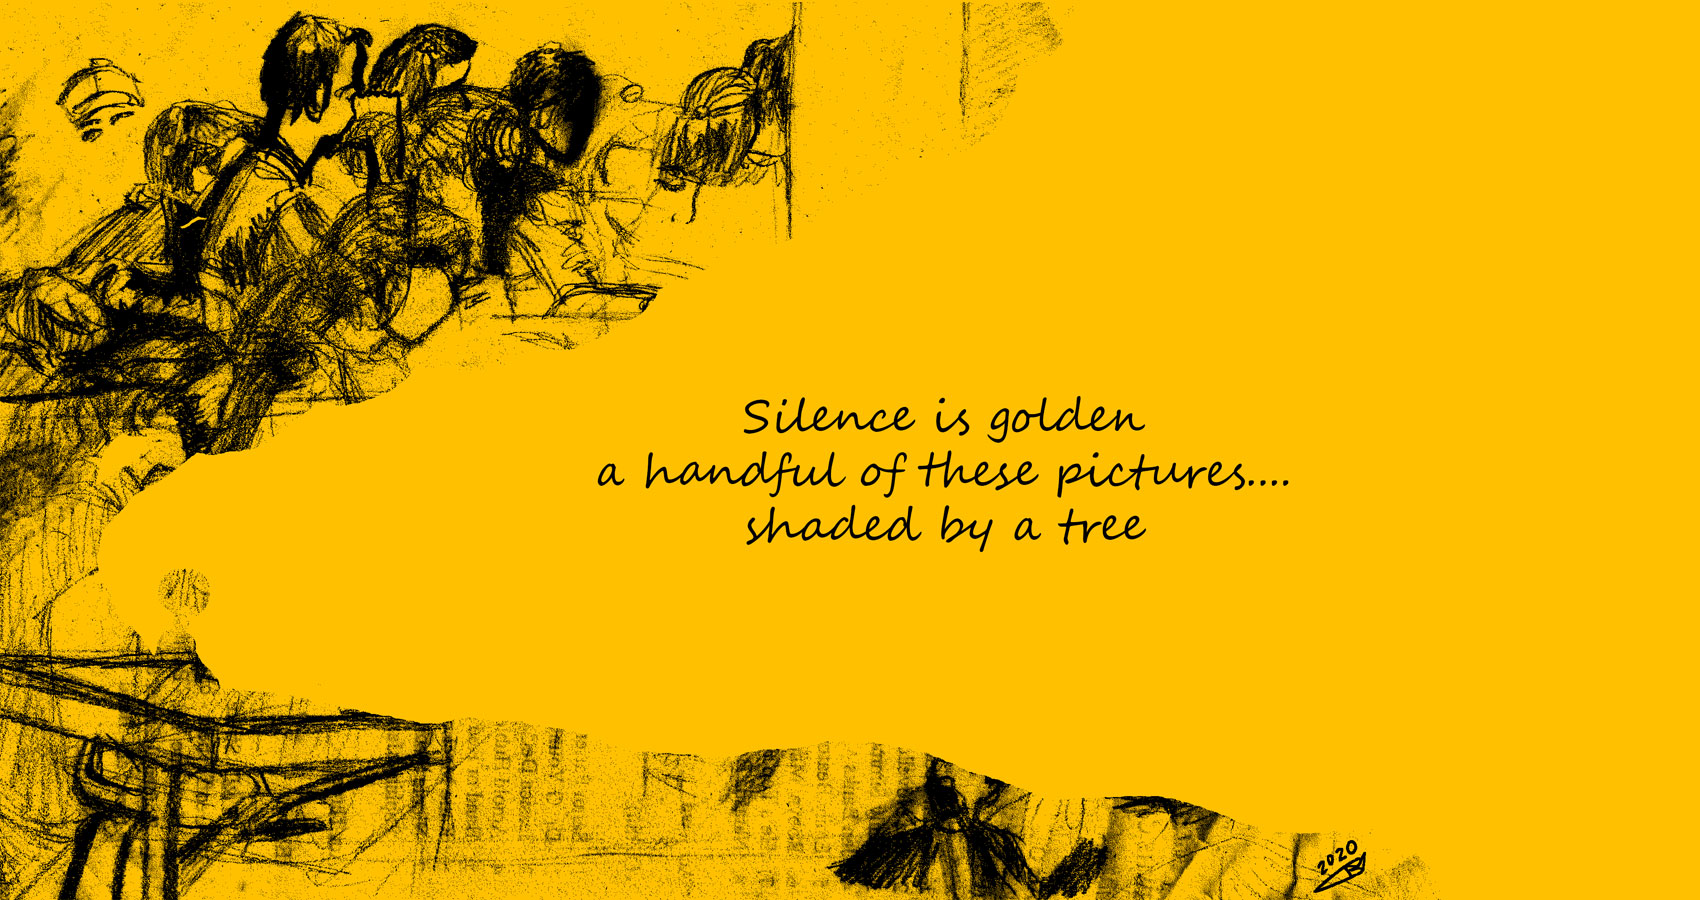 Golden Memories, a haiku by Robyn MacKinnon at Spillwords.com